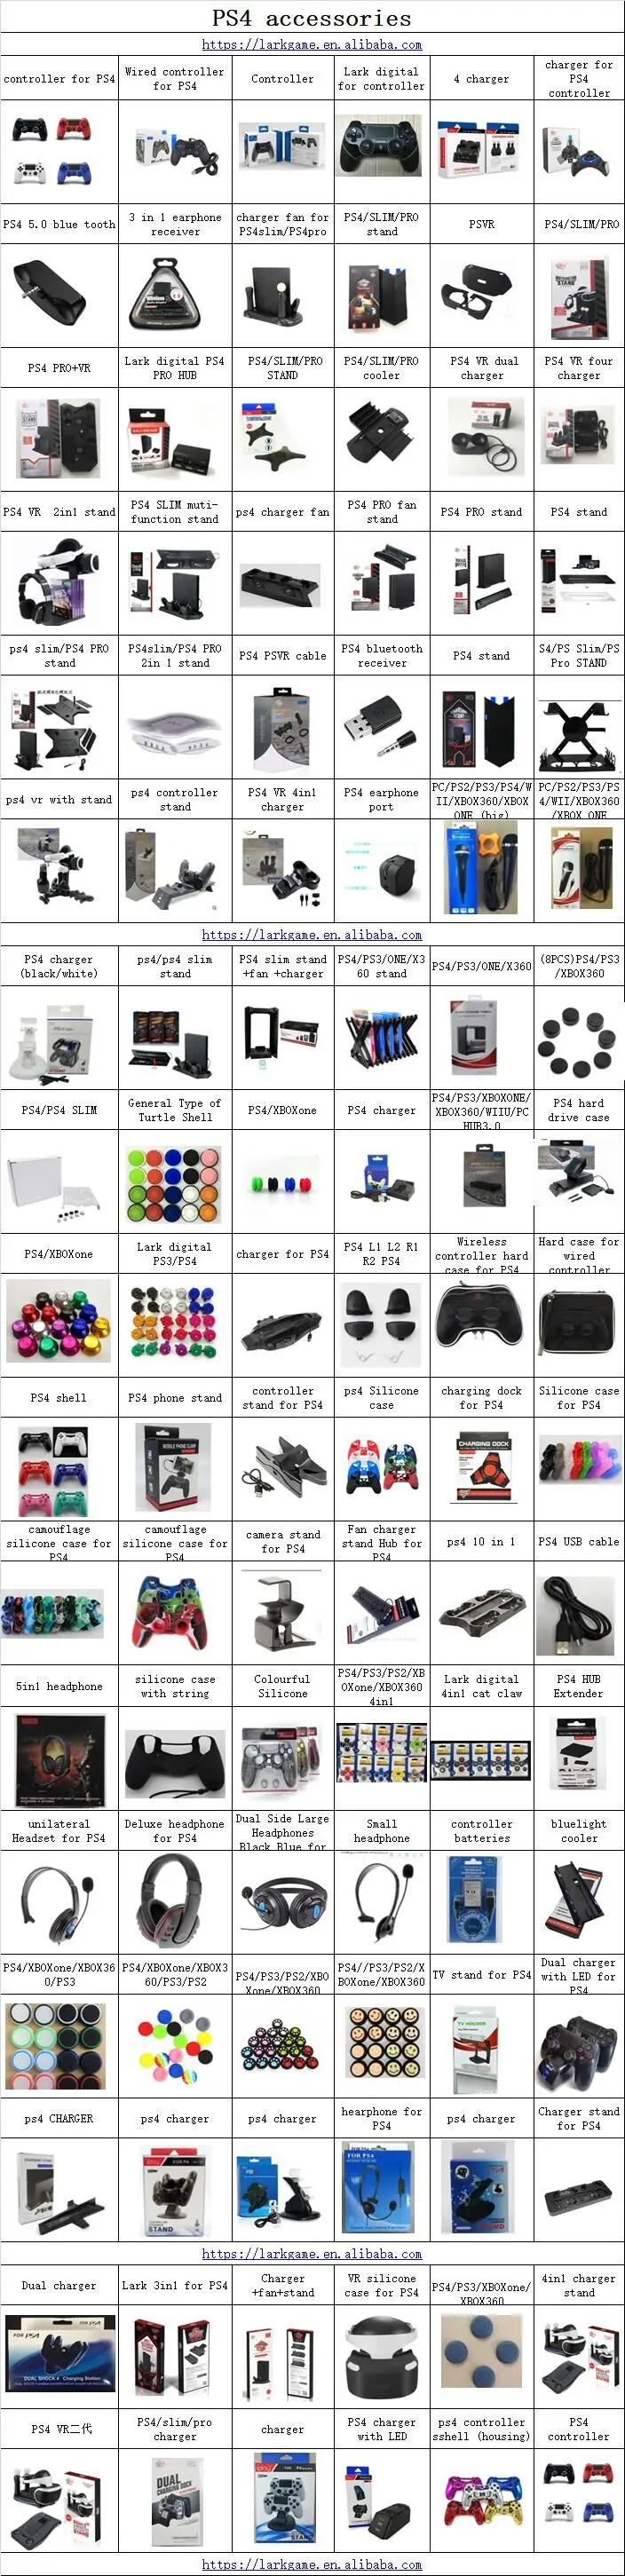 PS4 Accessories.jpg